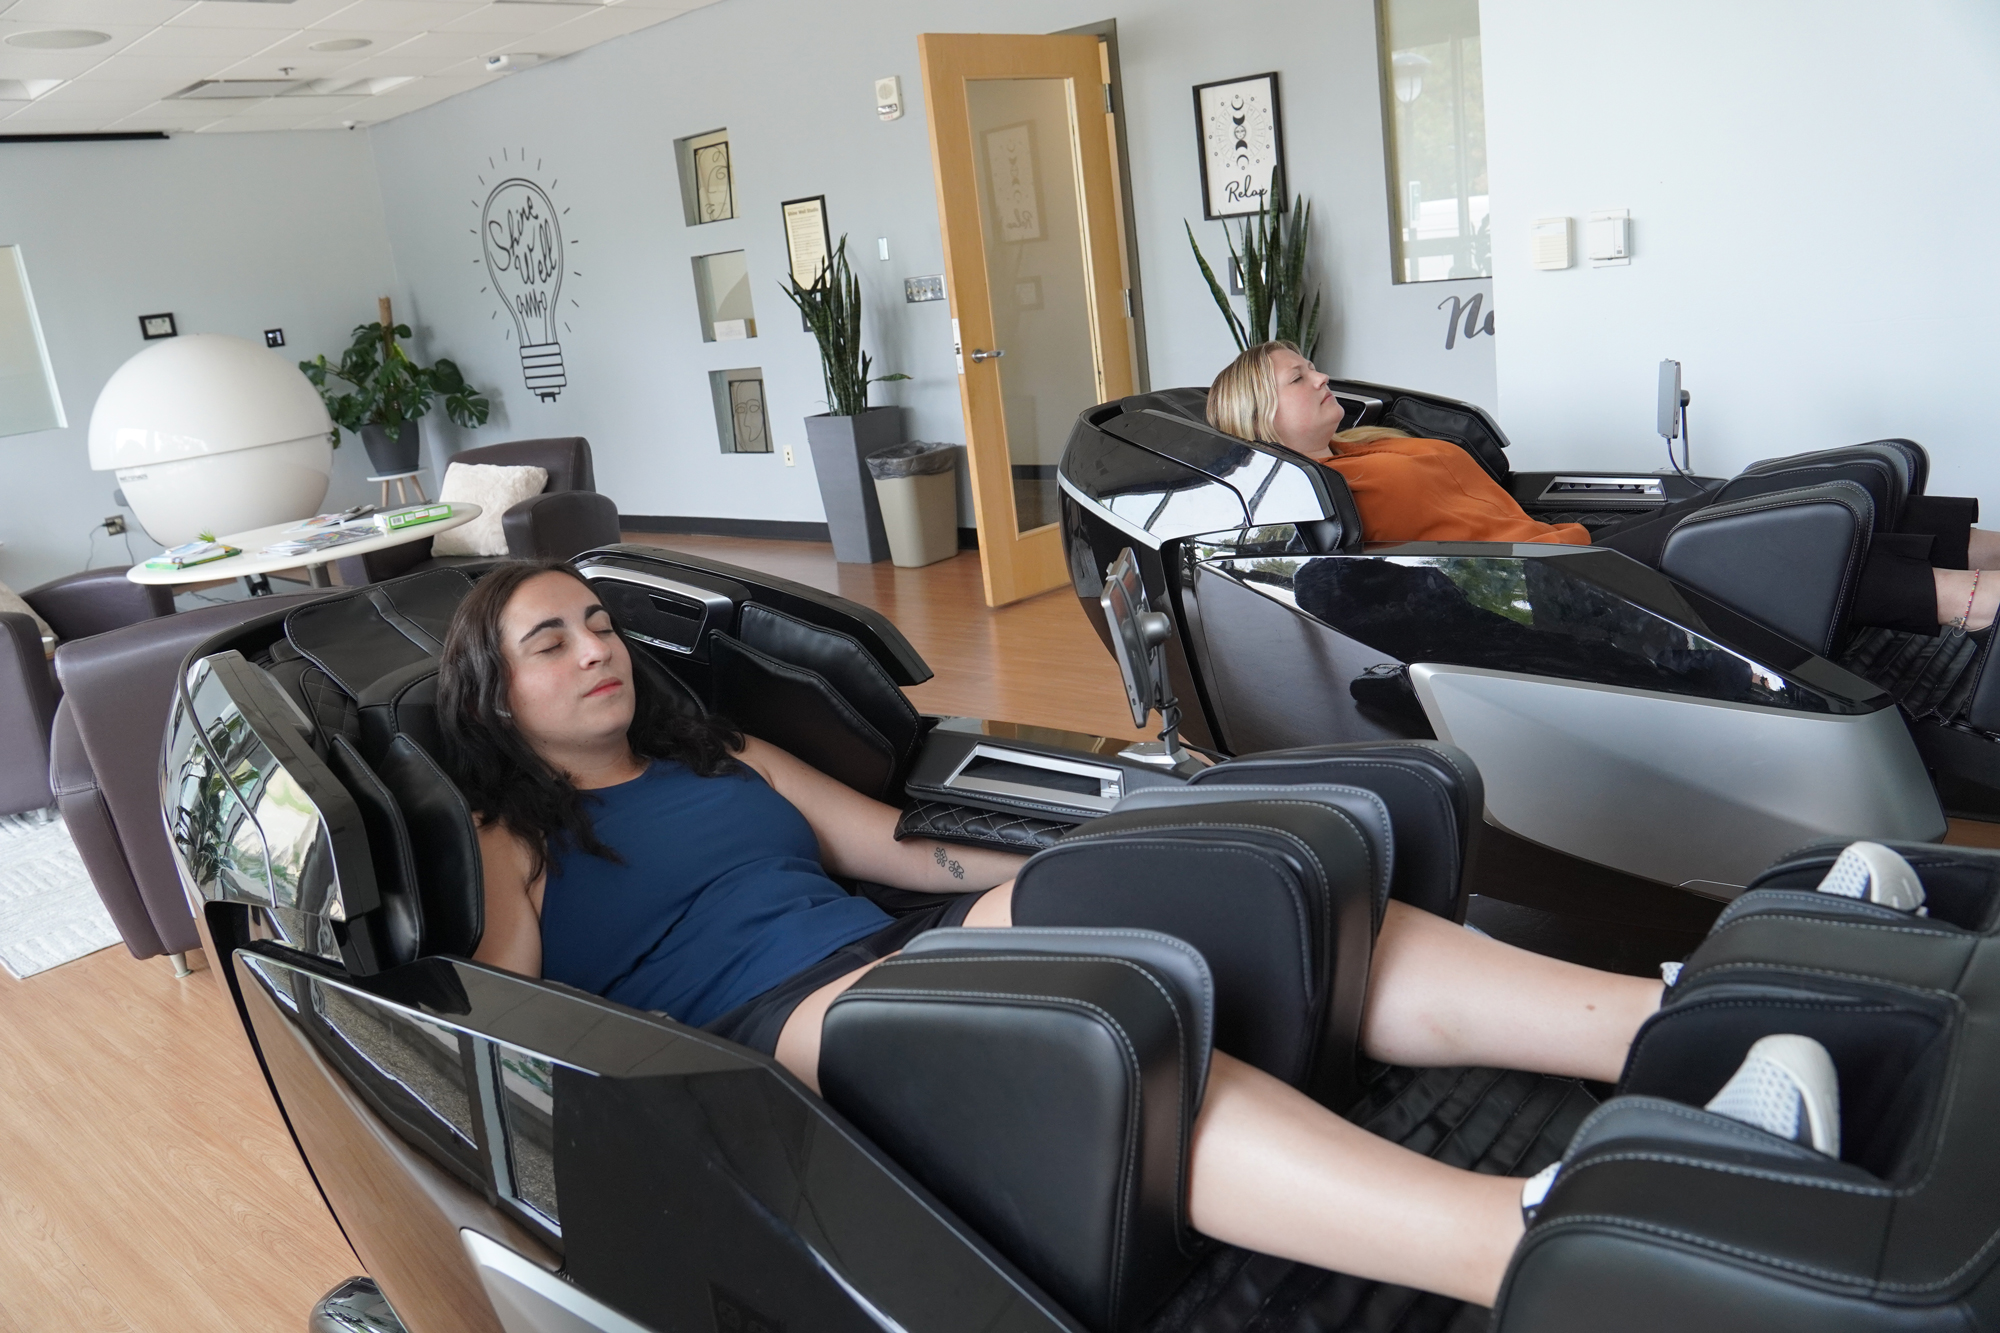 2 women in massage chairs in a wellness studio